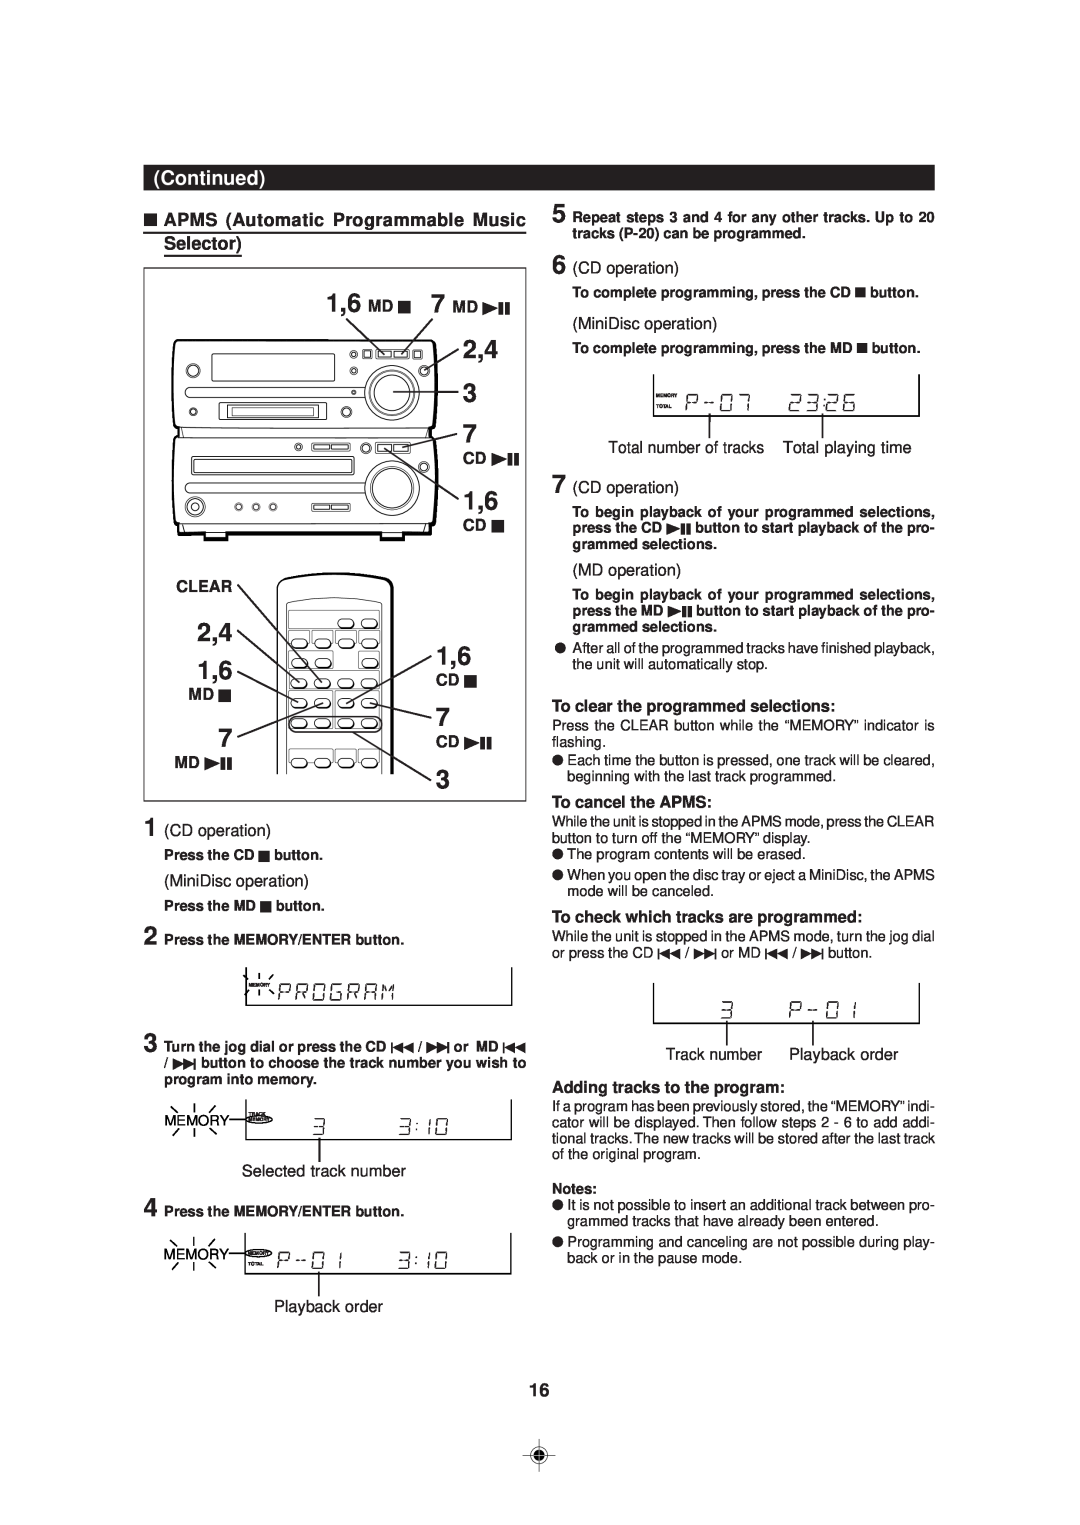 Sharp MD-MX30 MD operation manual 1,6 MD H 